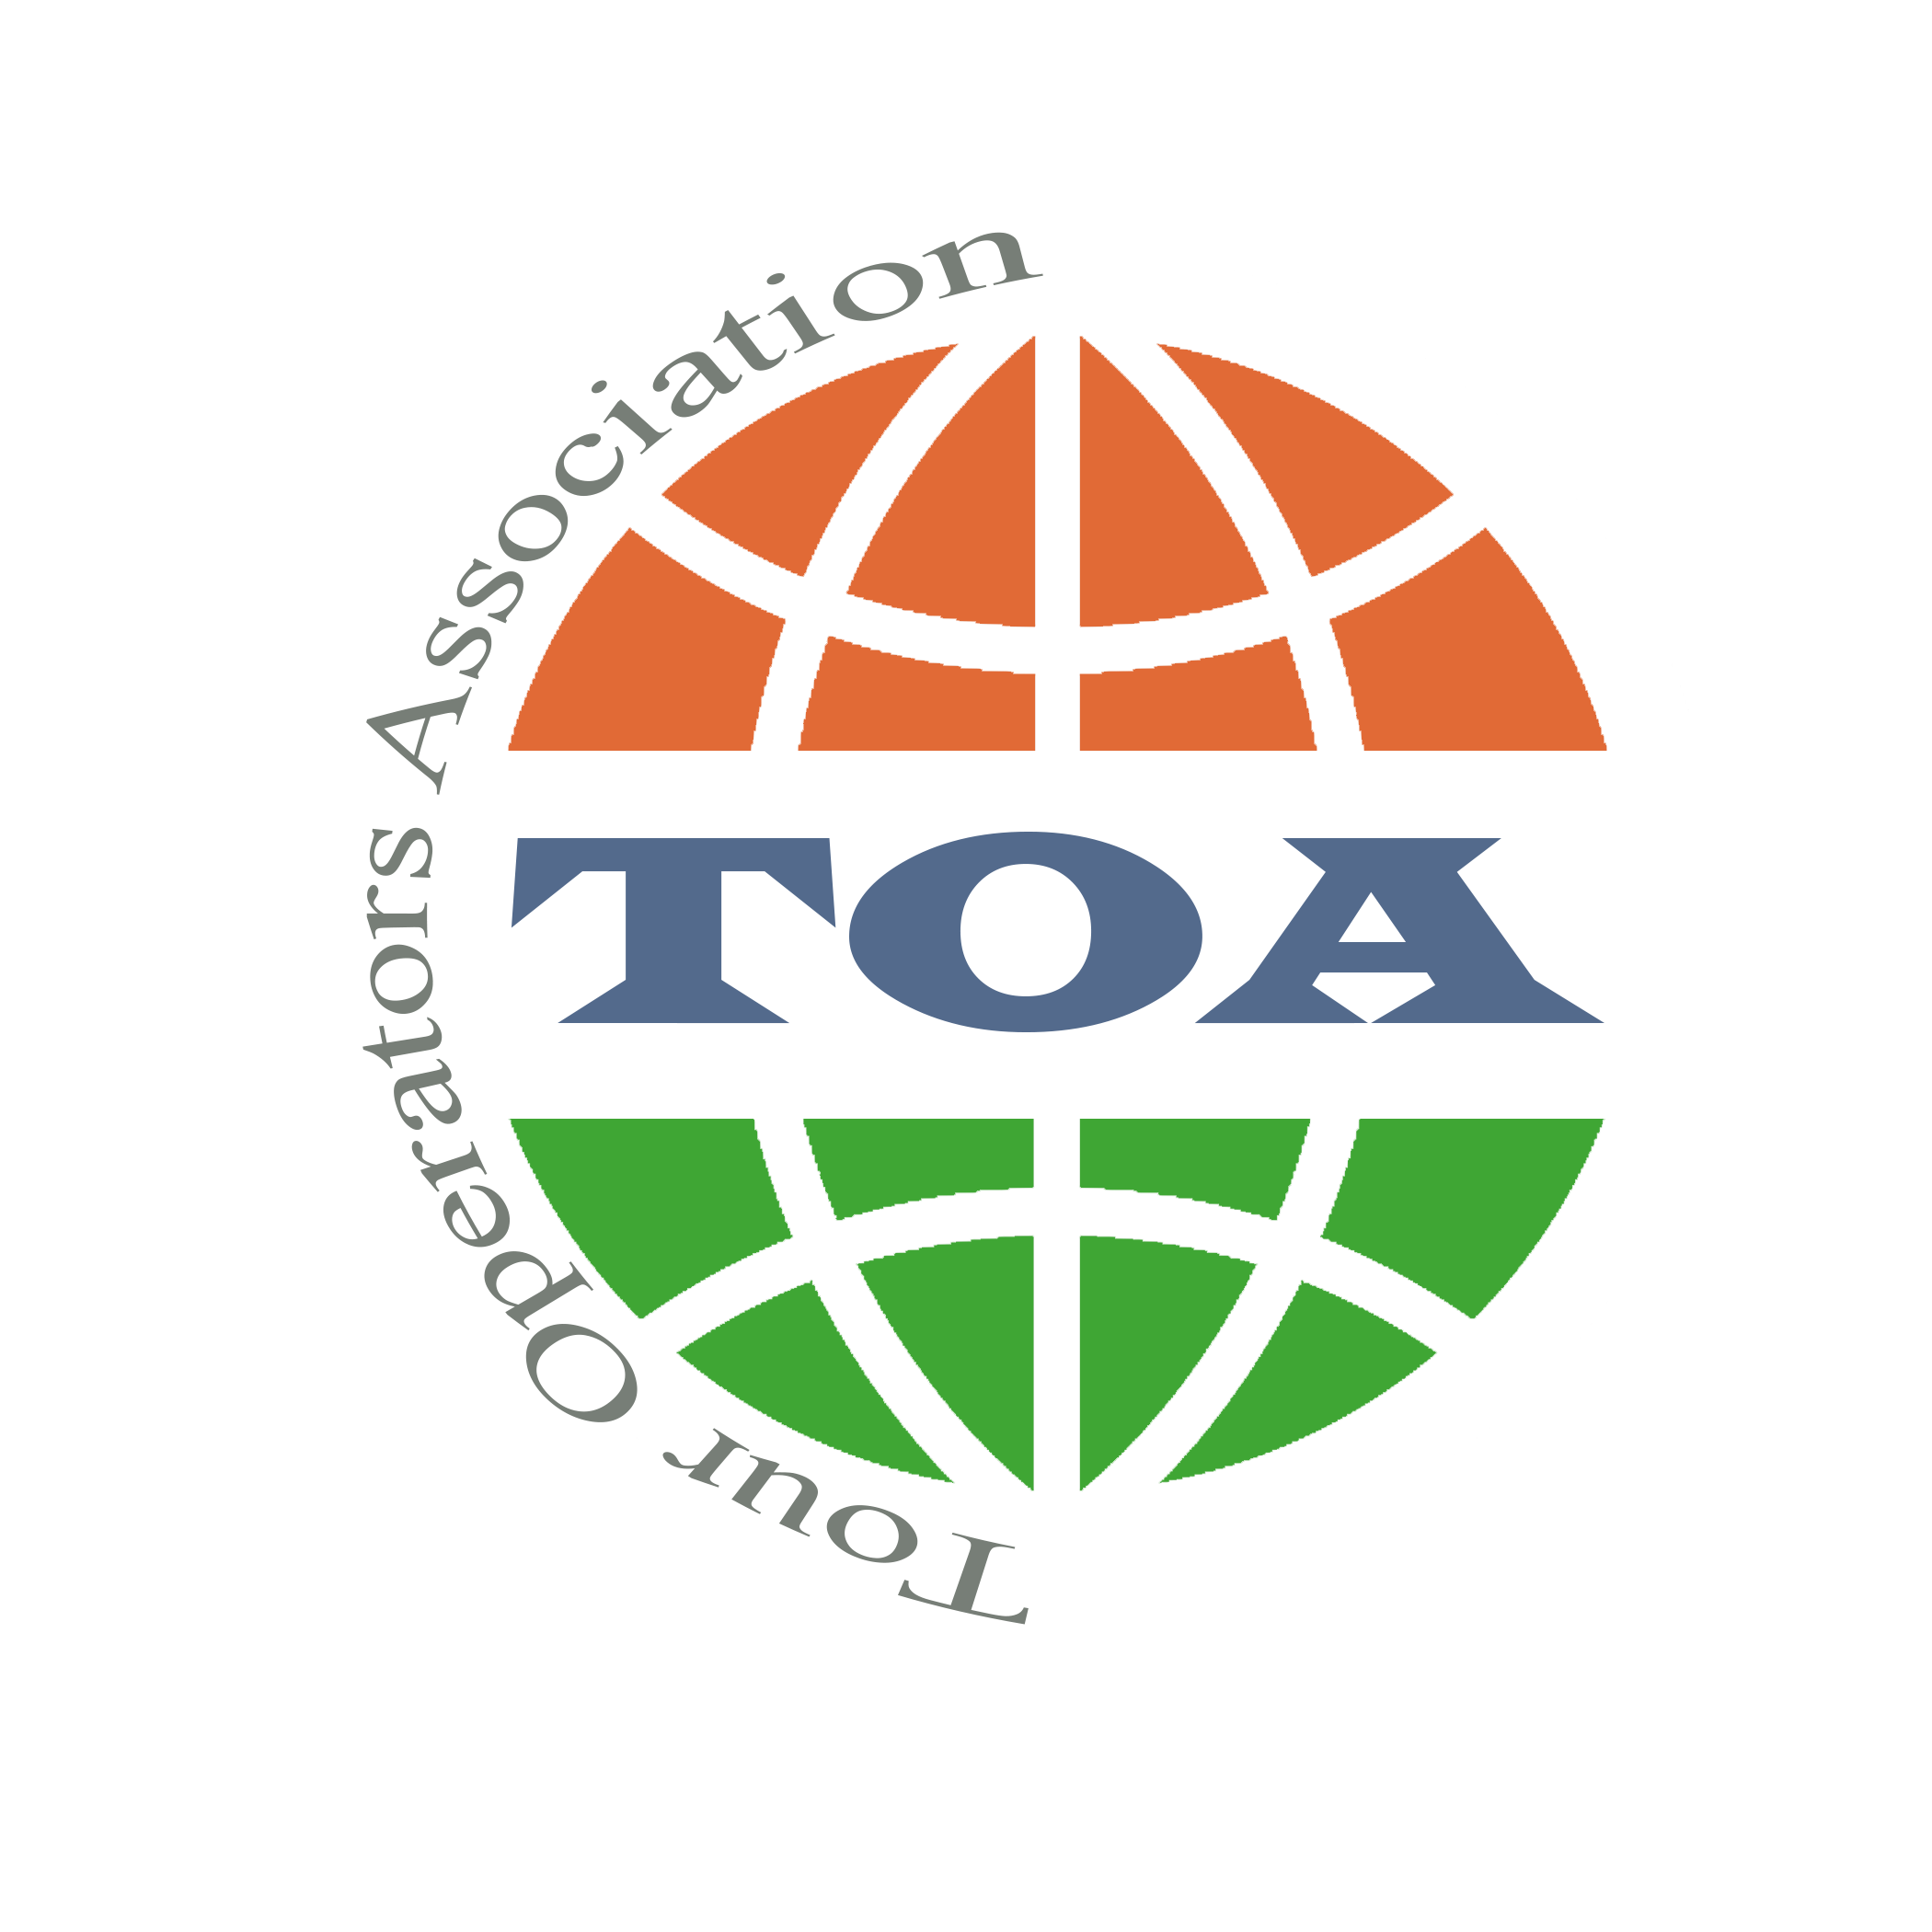 bangladesh inbound tour operators association